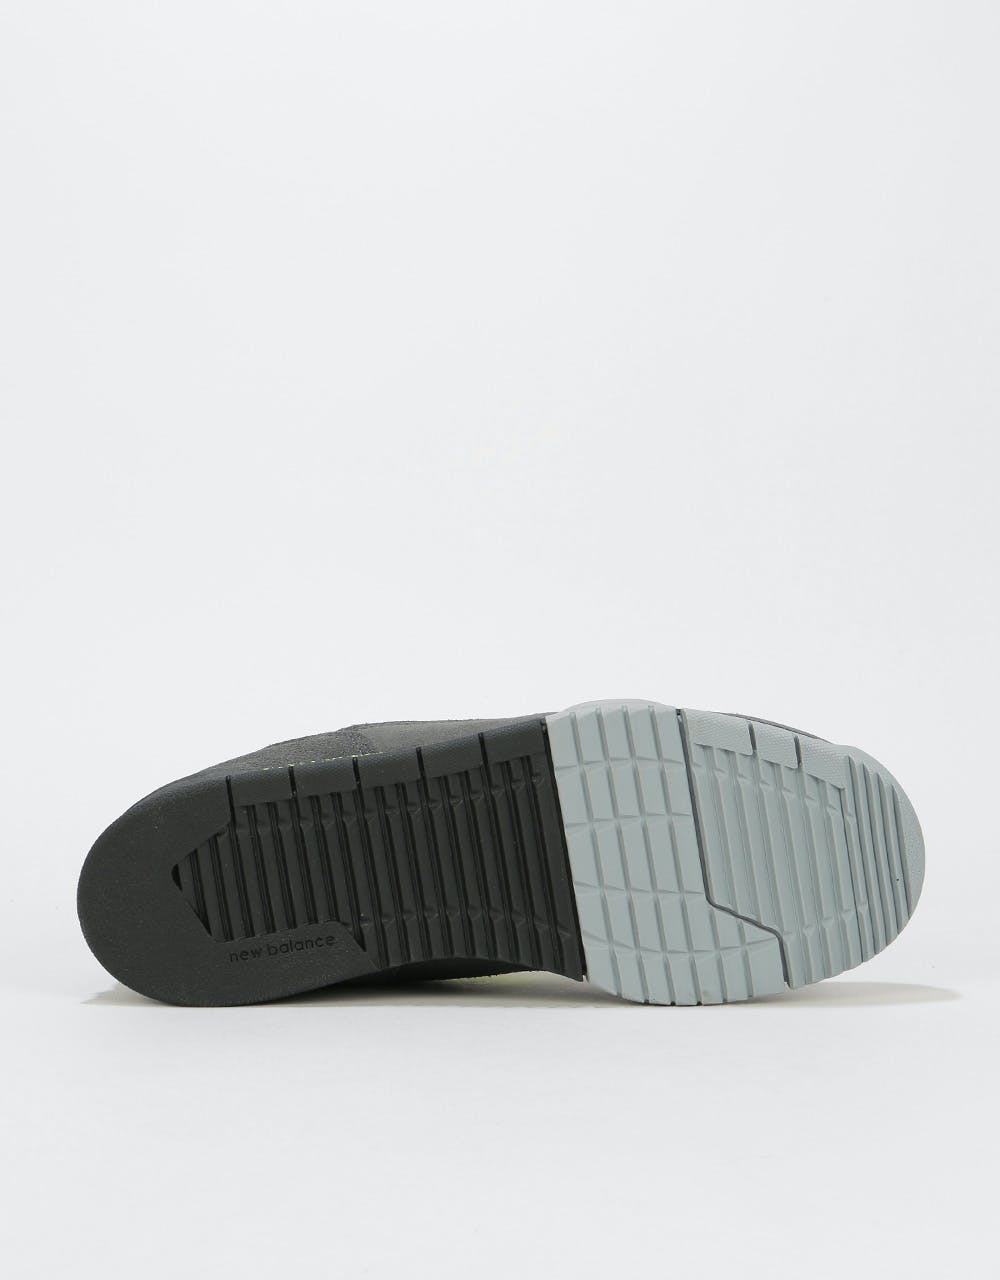 New Balance AC 562 Shoes - Grey/Royal